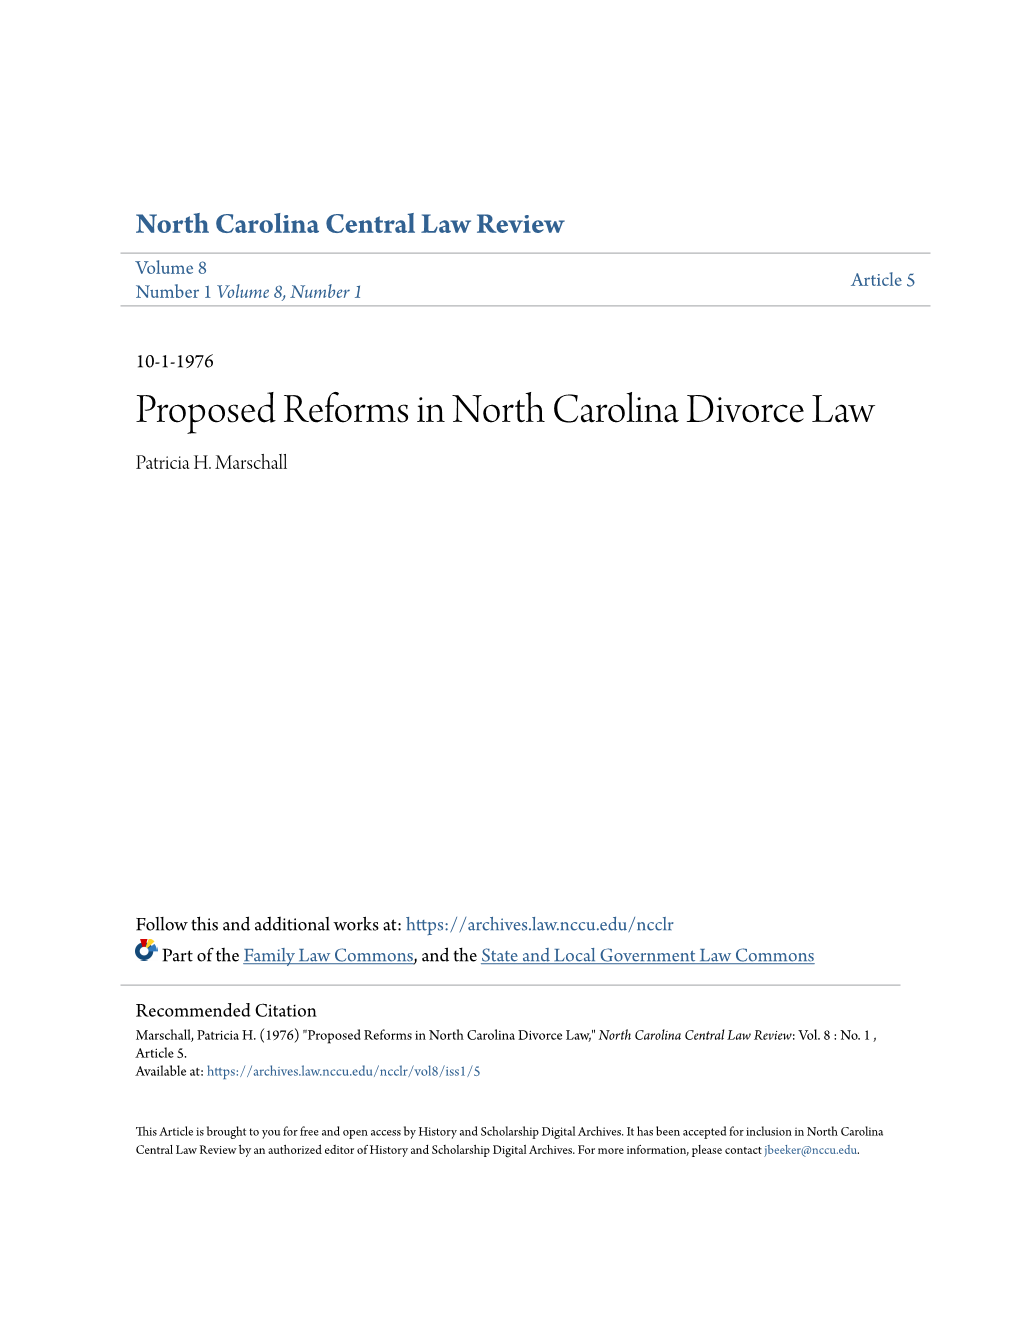 Proposed Reforms in North Carolina Divorce Law Patricia H